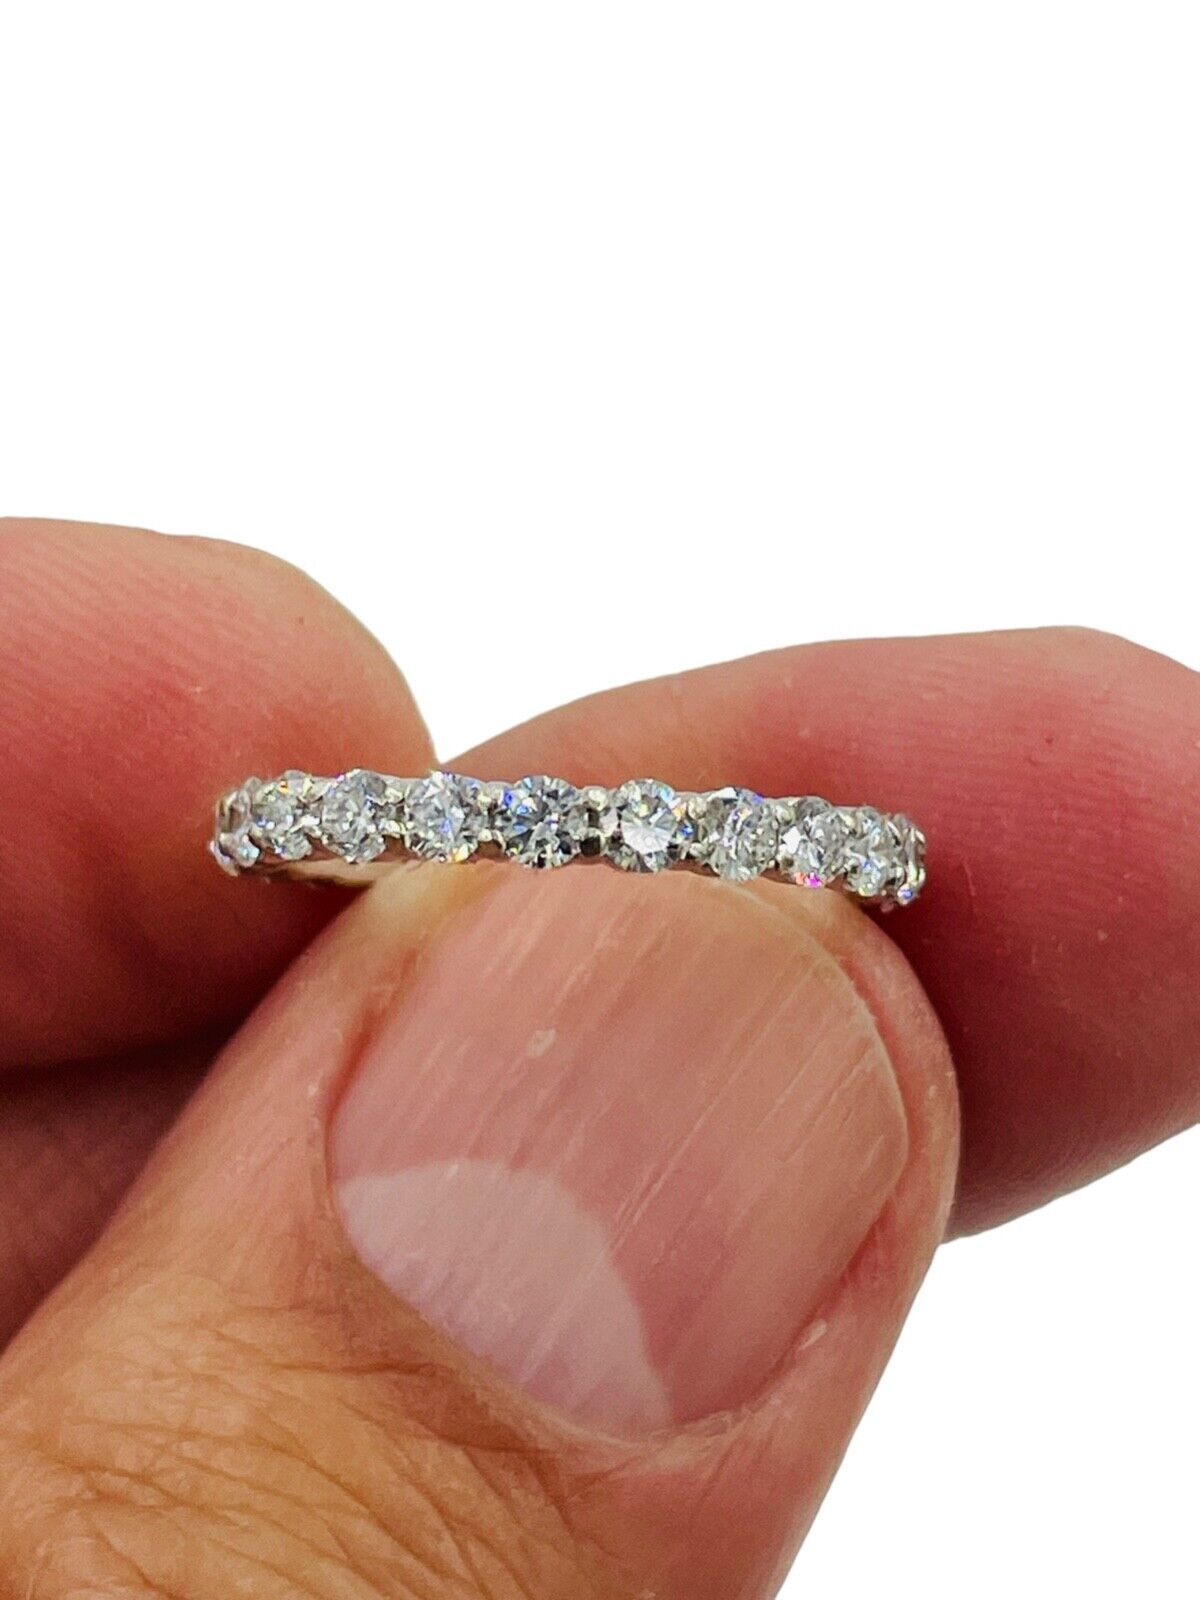 14k White Gold Eternity Diamond Band Ring Size 5